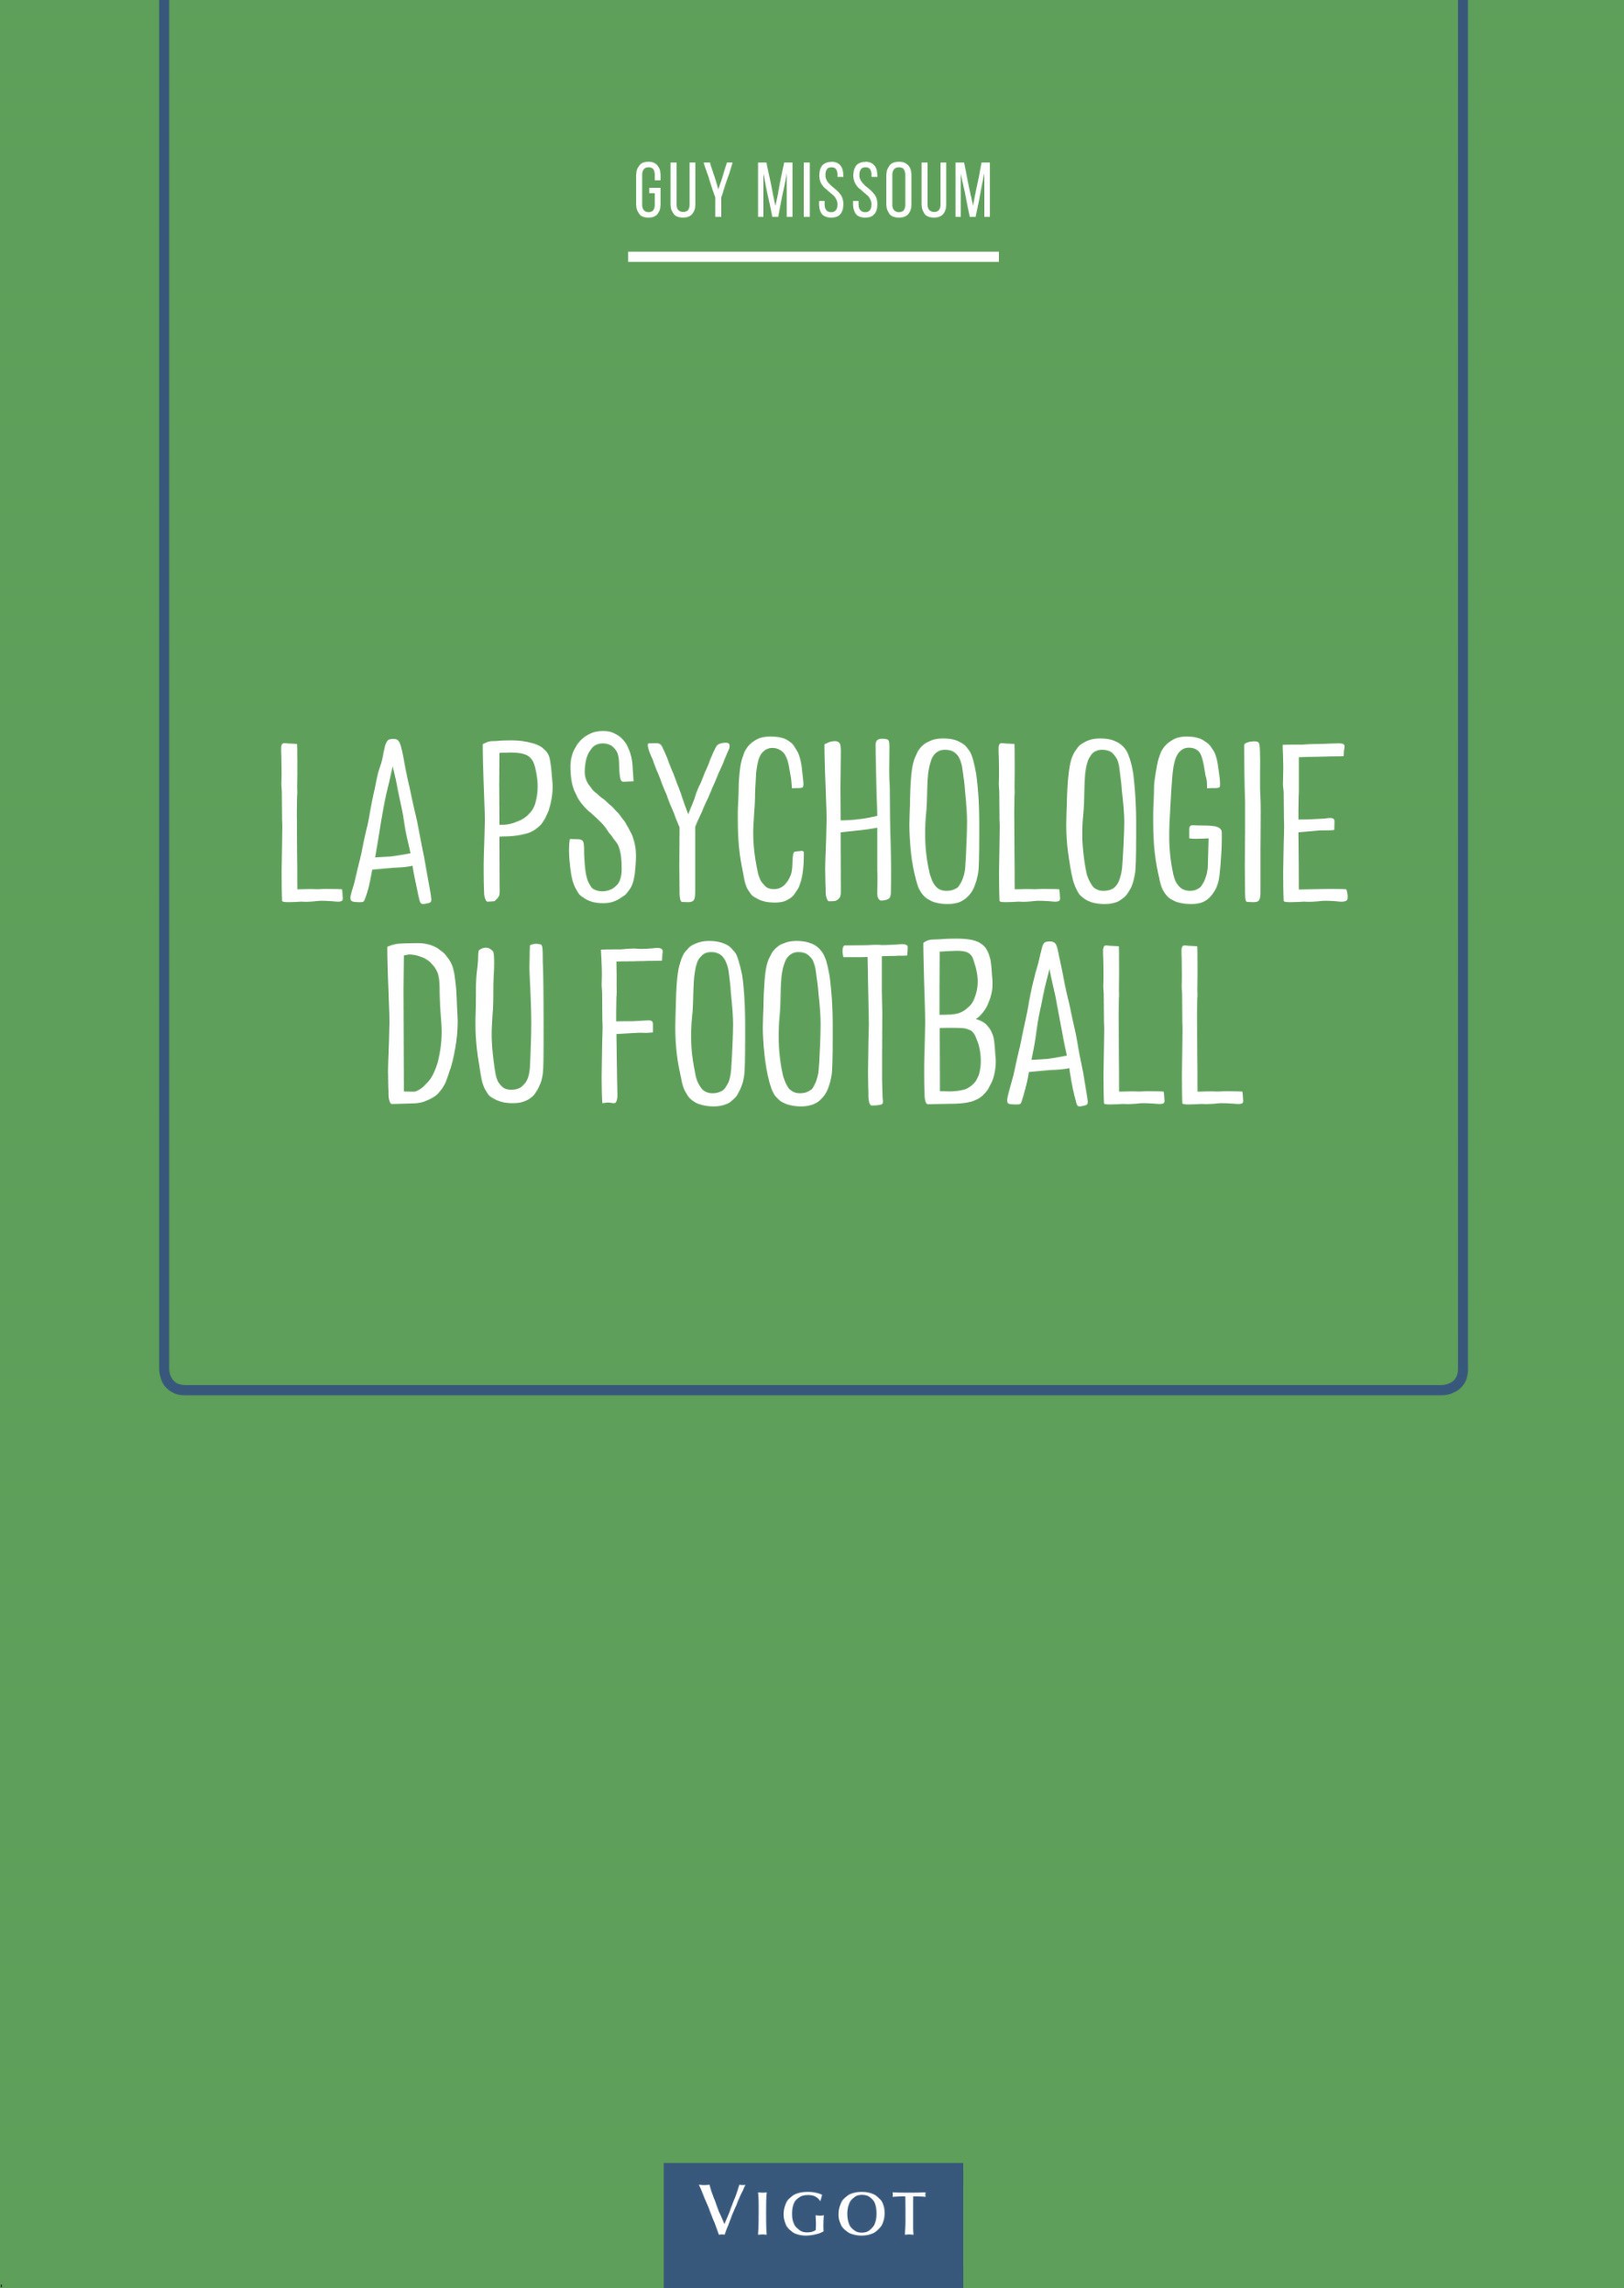 La psychologie du football